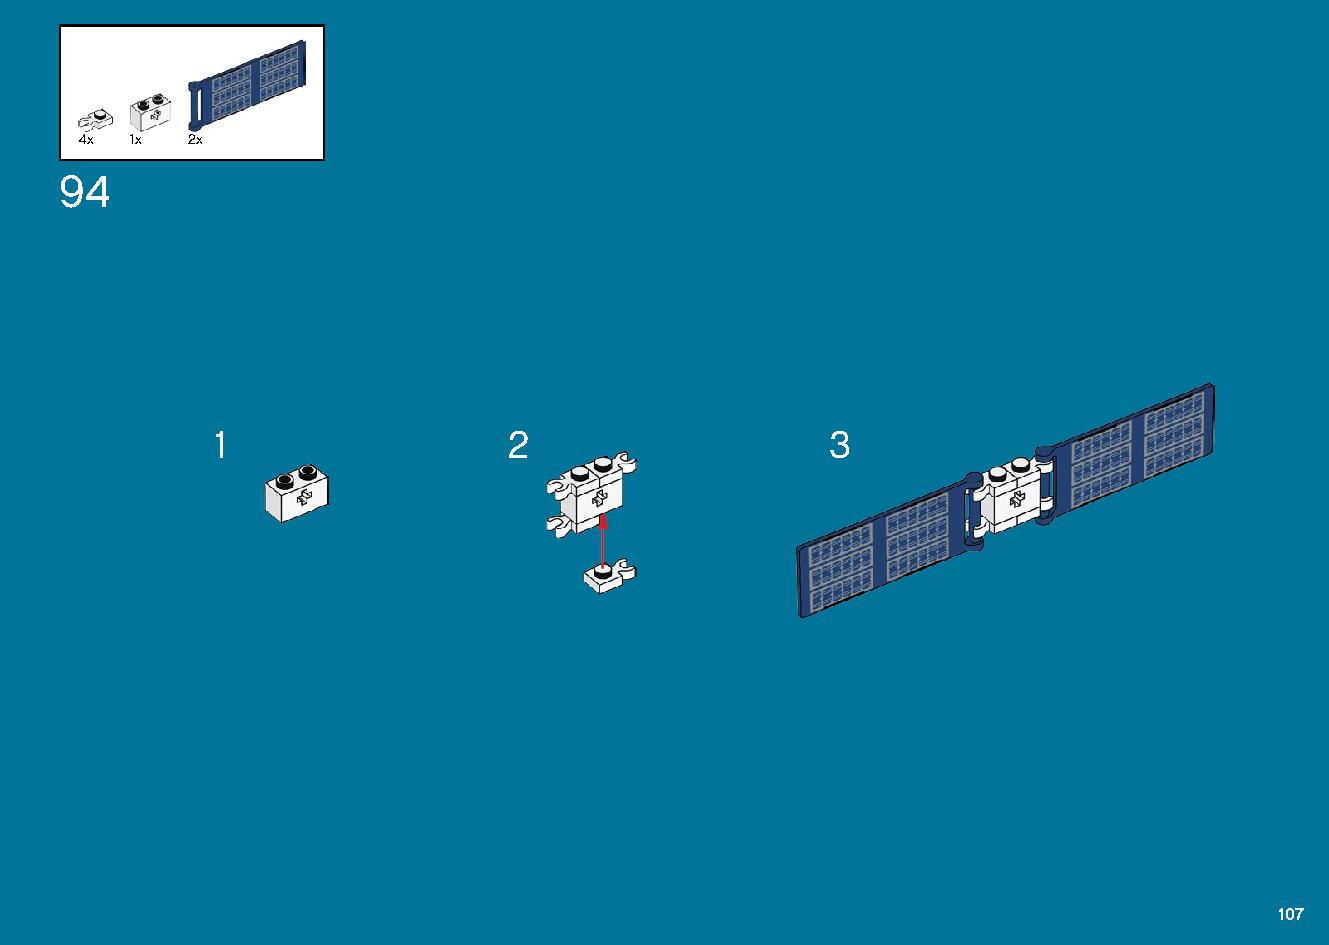 International Space Station 21321 レゴの商品情報 レゴの説明書・組立方法 107 page